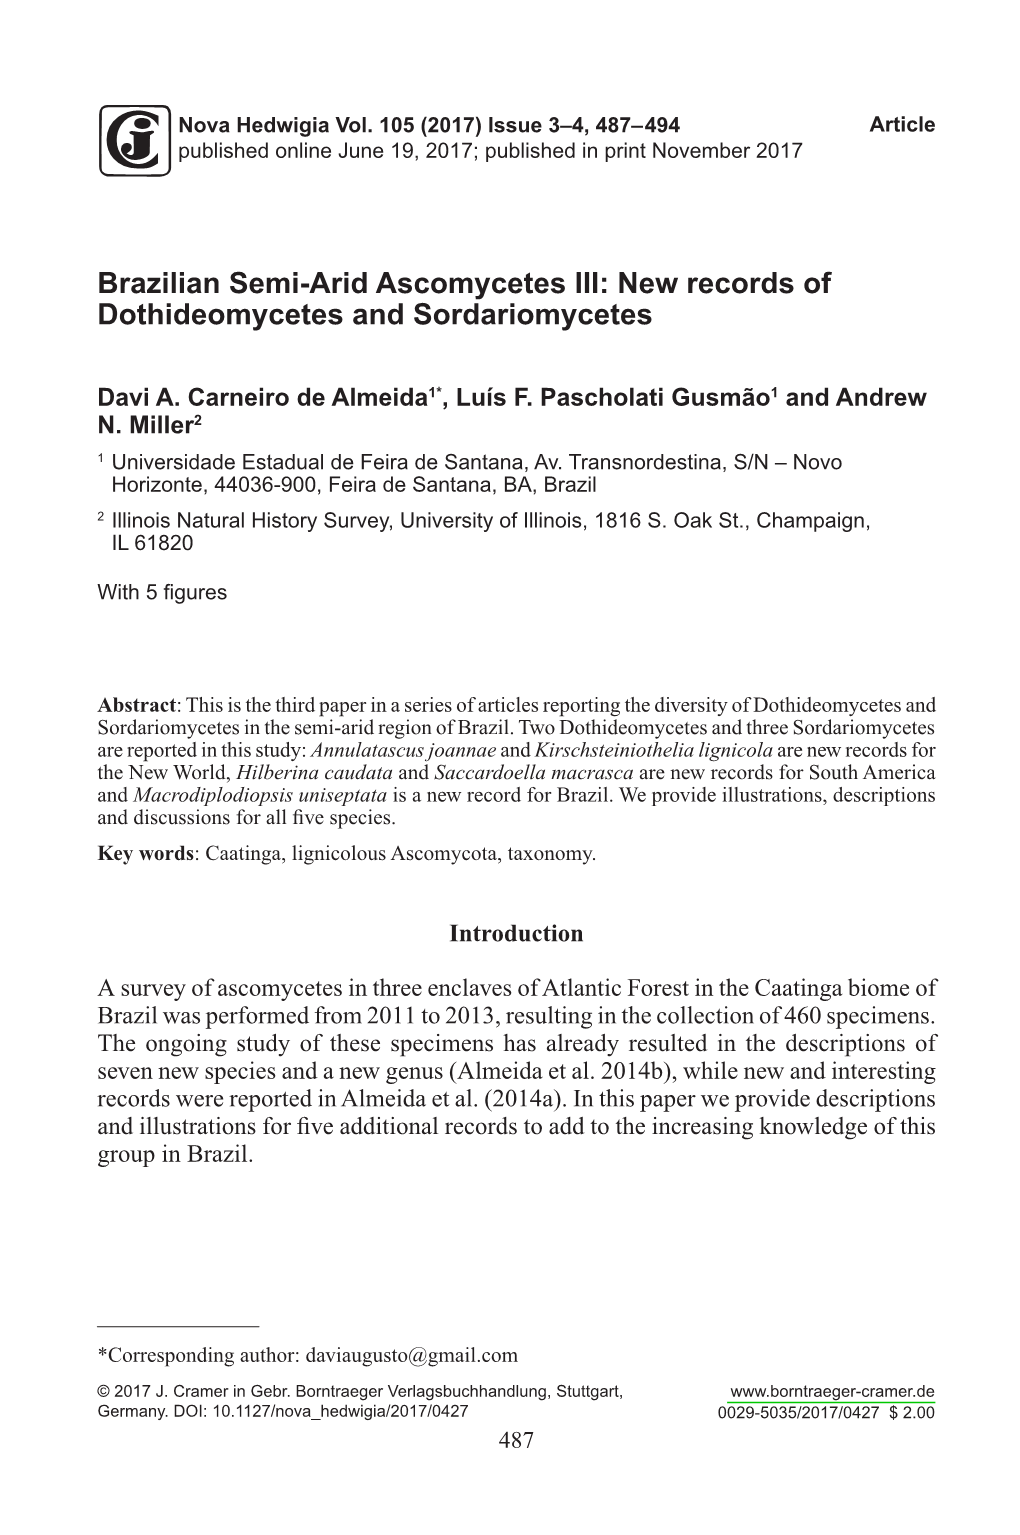 Brazilian Semi-Arid Ascomycetes III: New Records of Dothideomycetes and Sordariomycetes